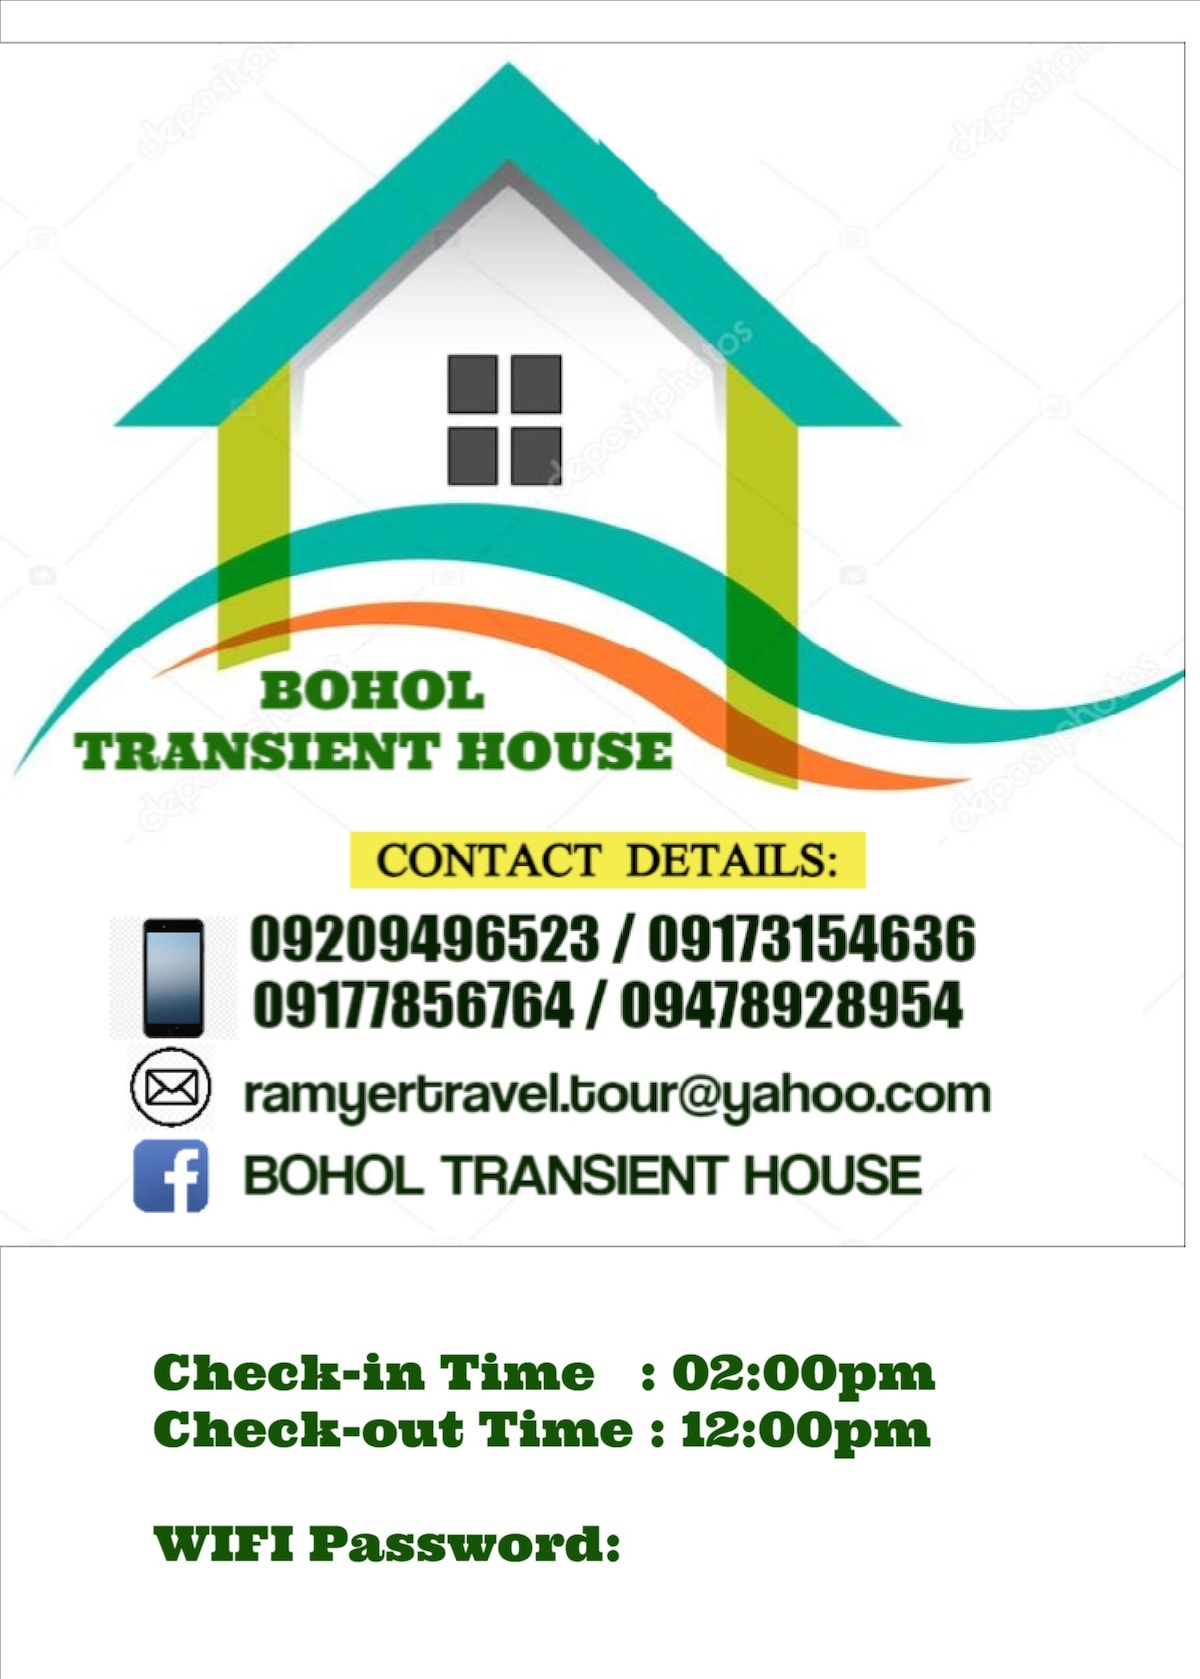 Bohol House For Rent